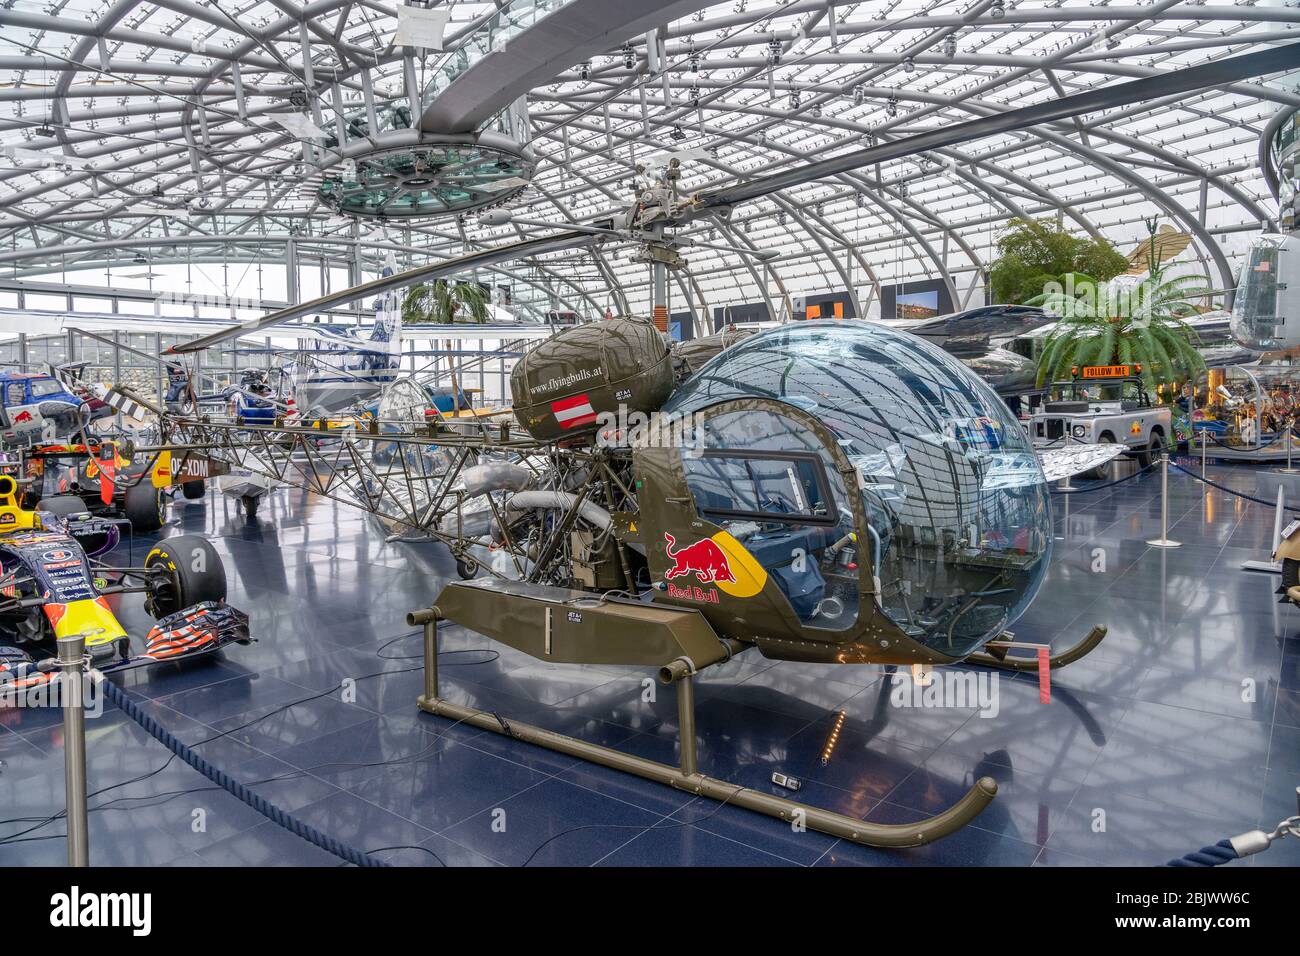 Feb 3, 2020 - Salzburg, Austria: Helicopter in display inside Flying Bulls Hangar-7 hall Stock Photo